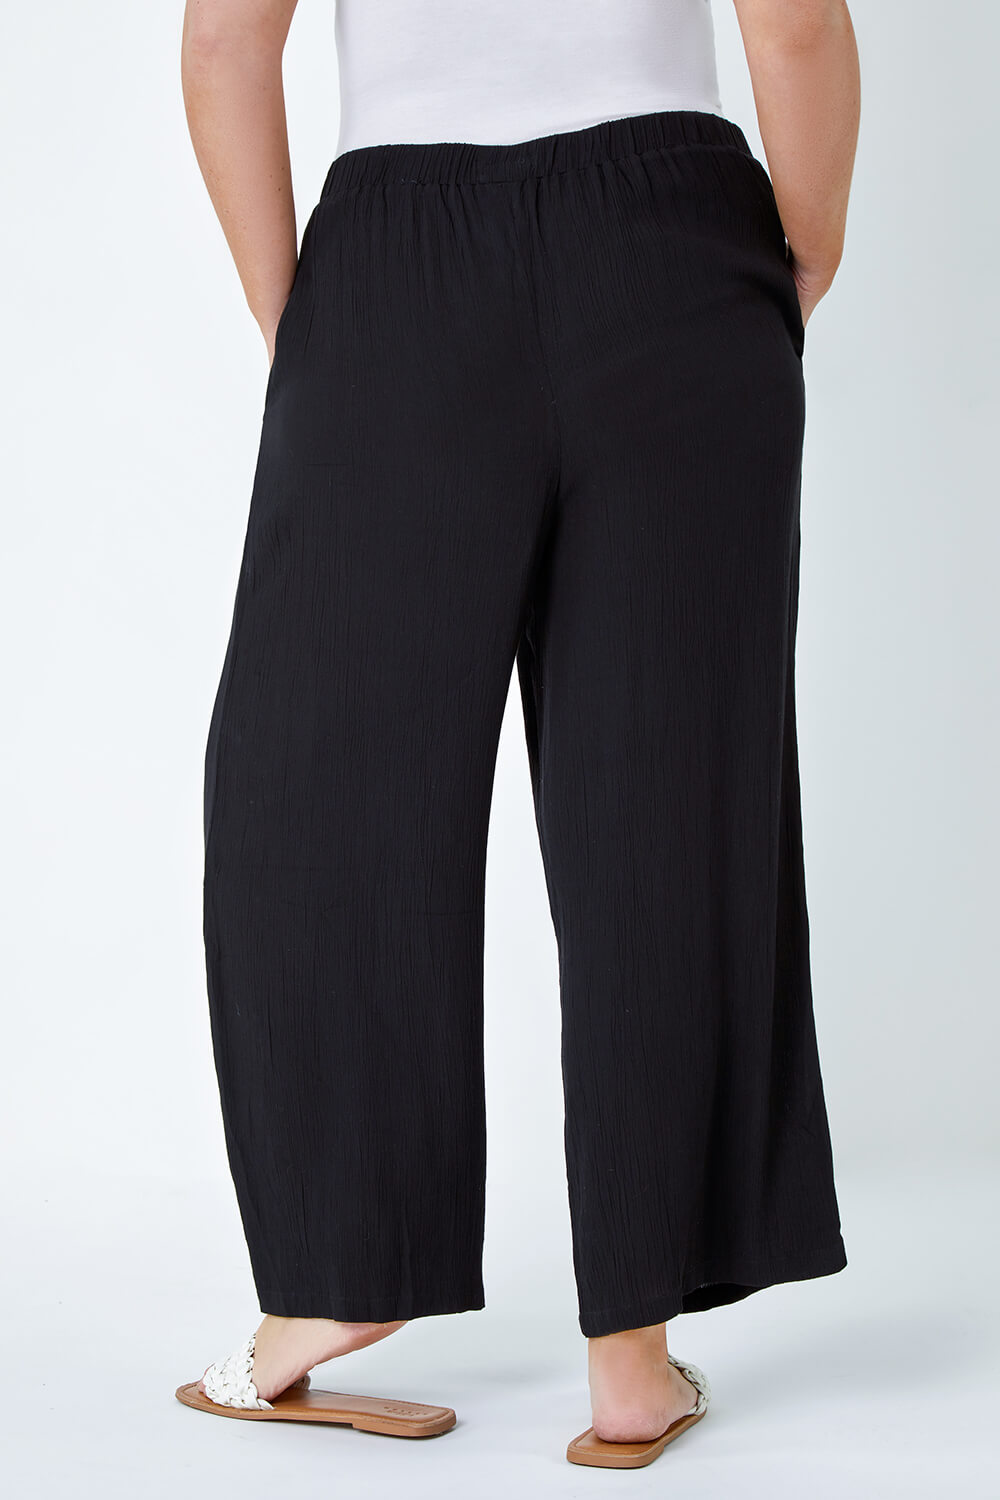 Black Curve Plain Crinkle Wide Leg Trousers, Image 3 of 5